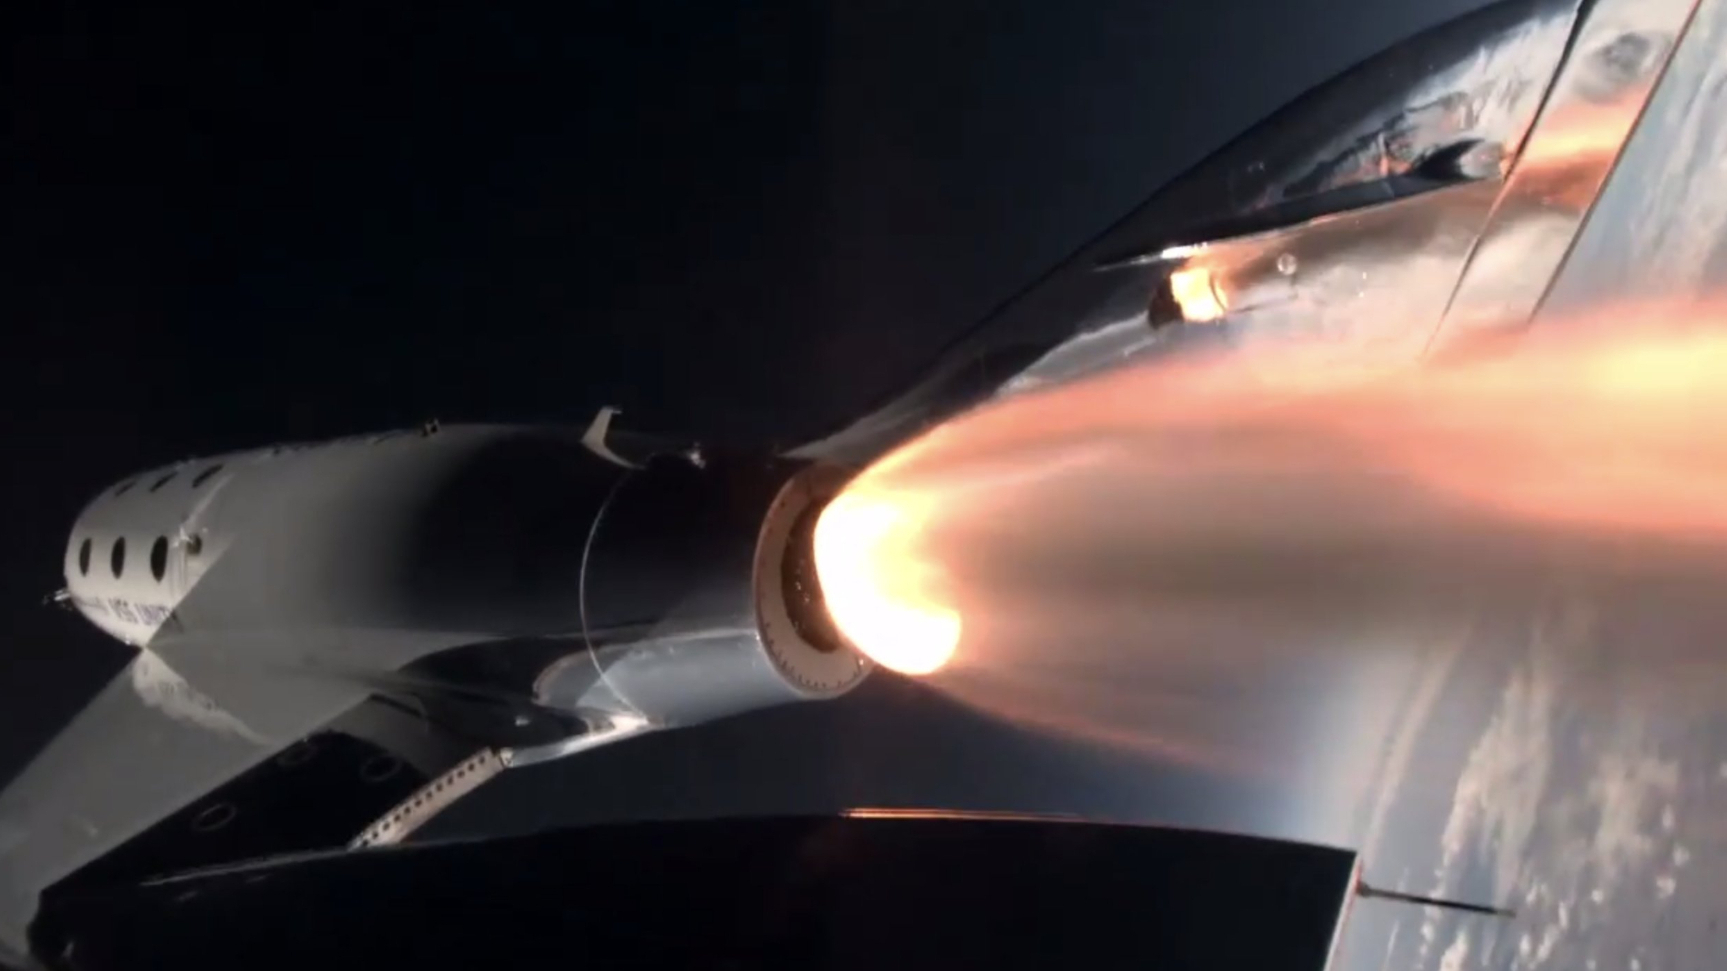  Watch an awe-inspiring video from final flight of Virgin Galactic's VSS Unity spaceplane  